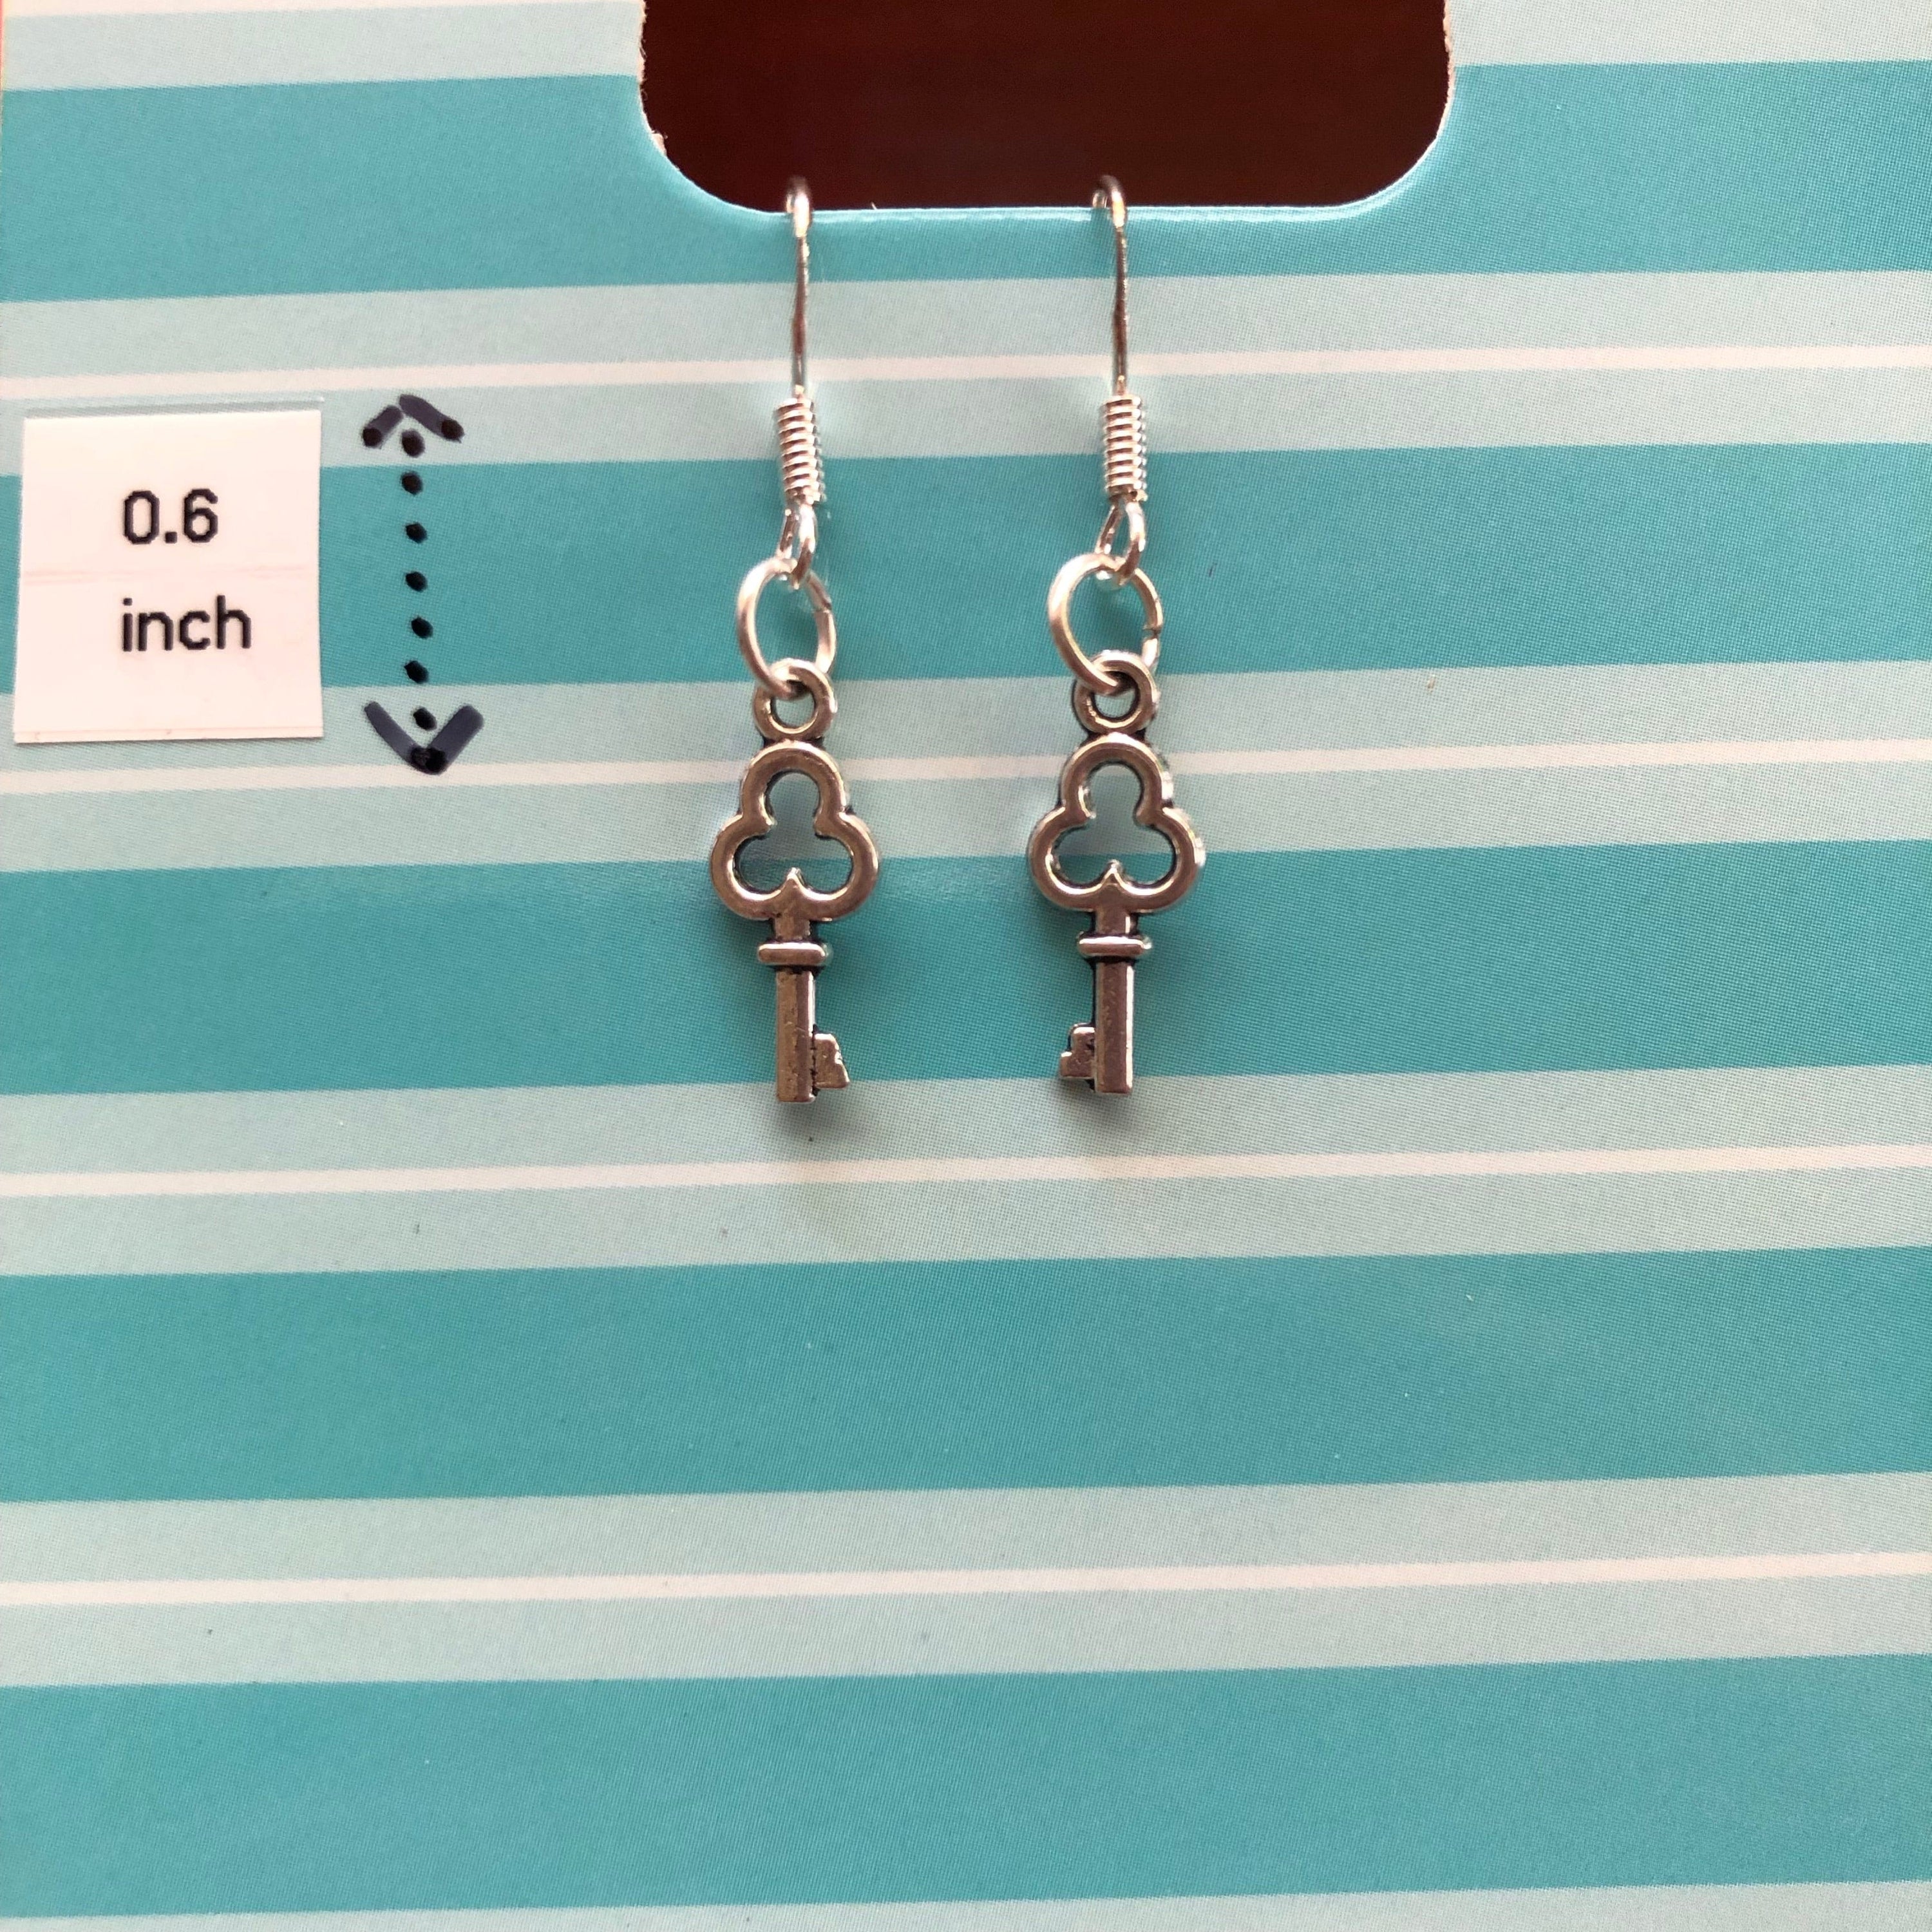 Macaron Small Open Key Earrings with Silver Hooks Kawaii Gifts 27667083